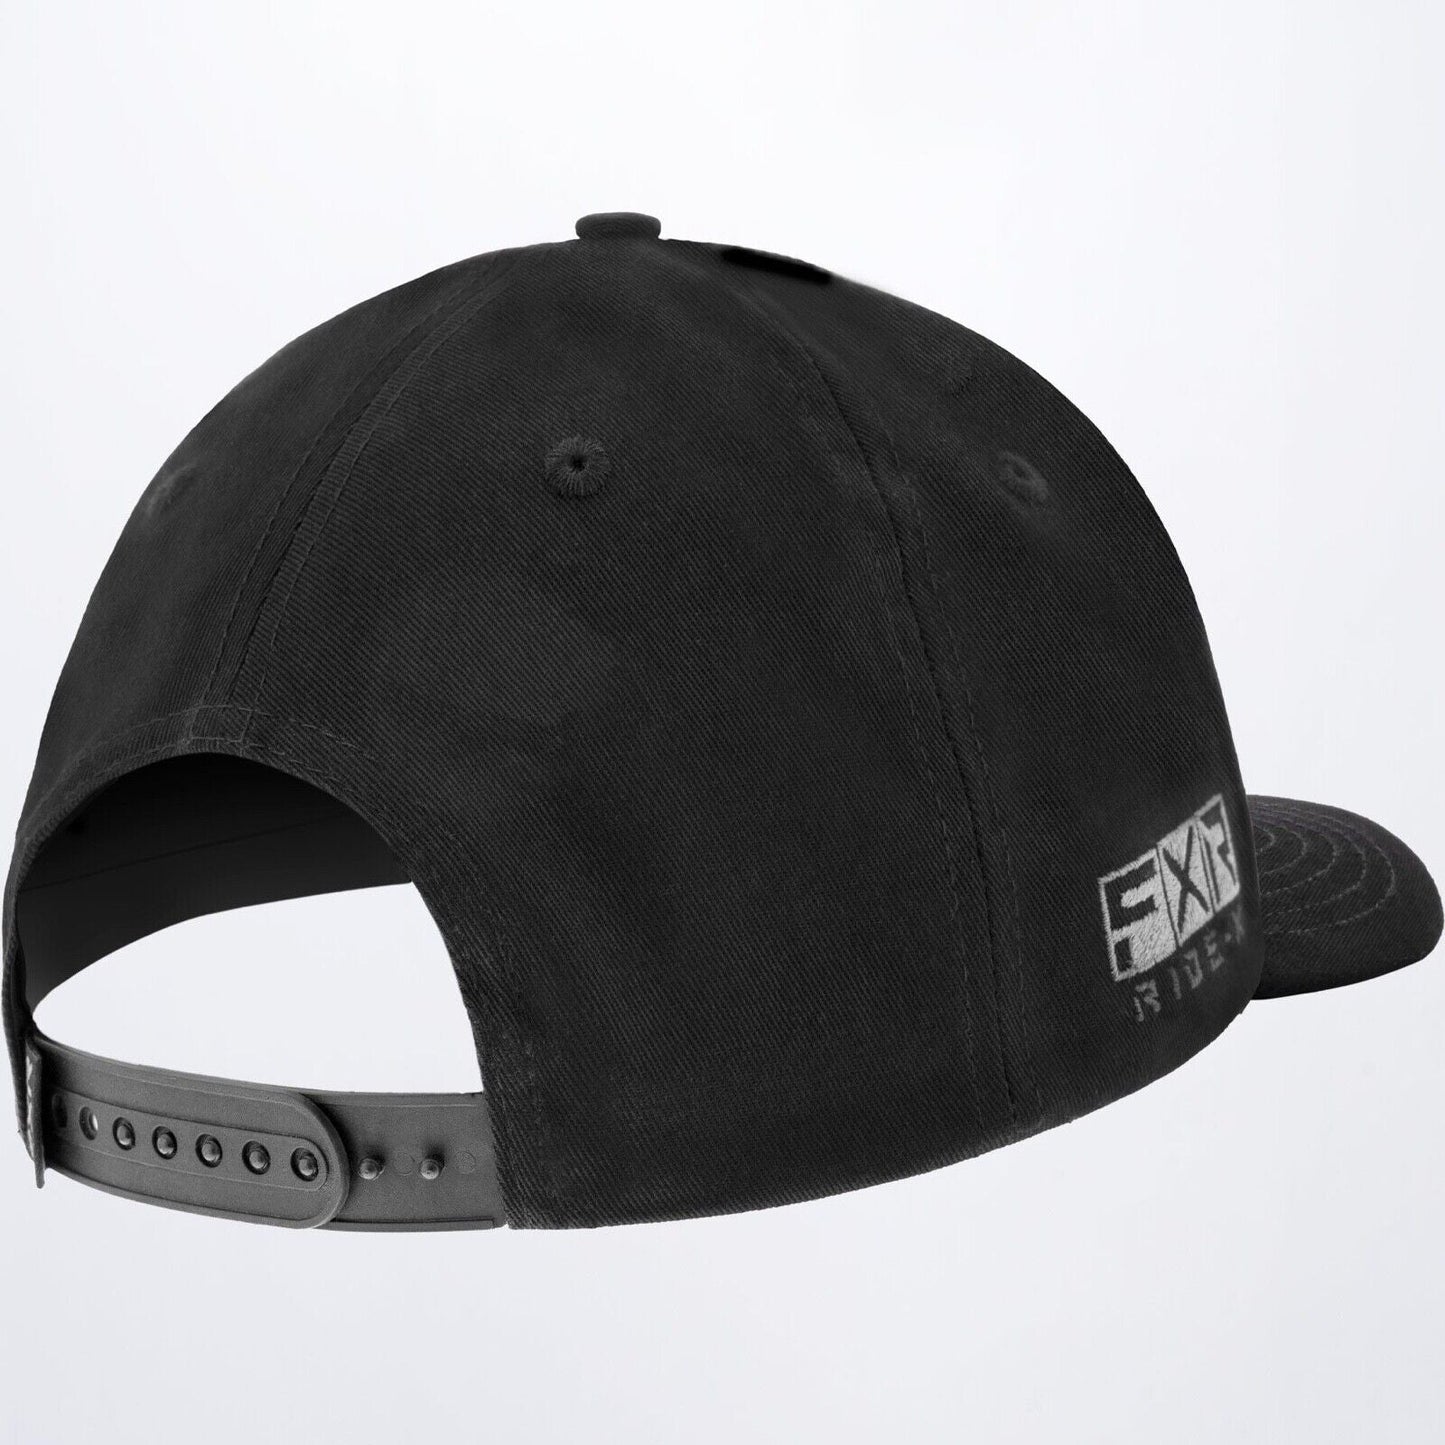 Official FXR Racing Authentic Black & Grey Cap - 221623-1005-00